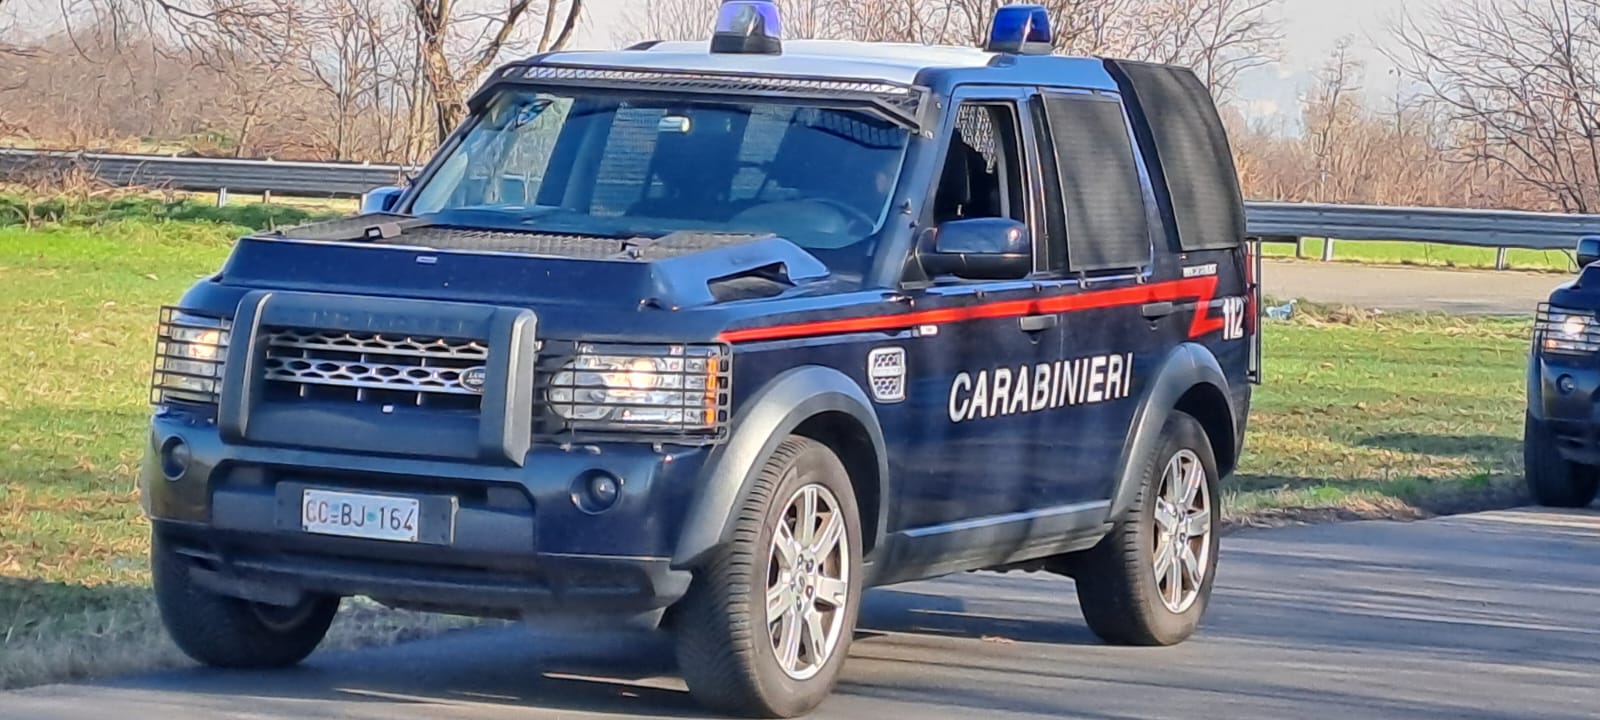 Blitz antidroga carabinieri